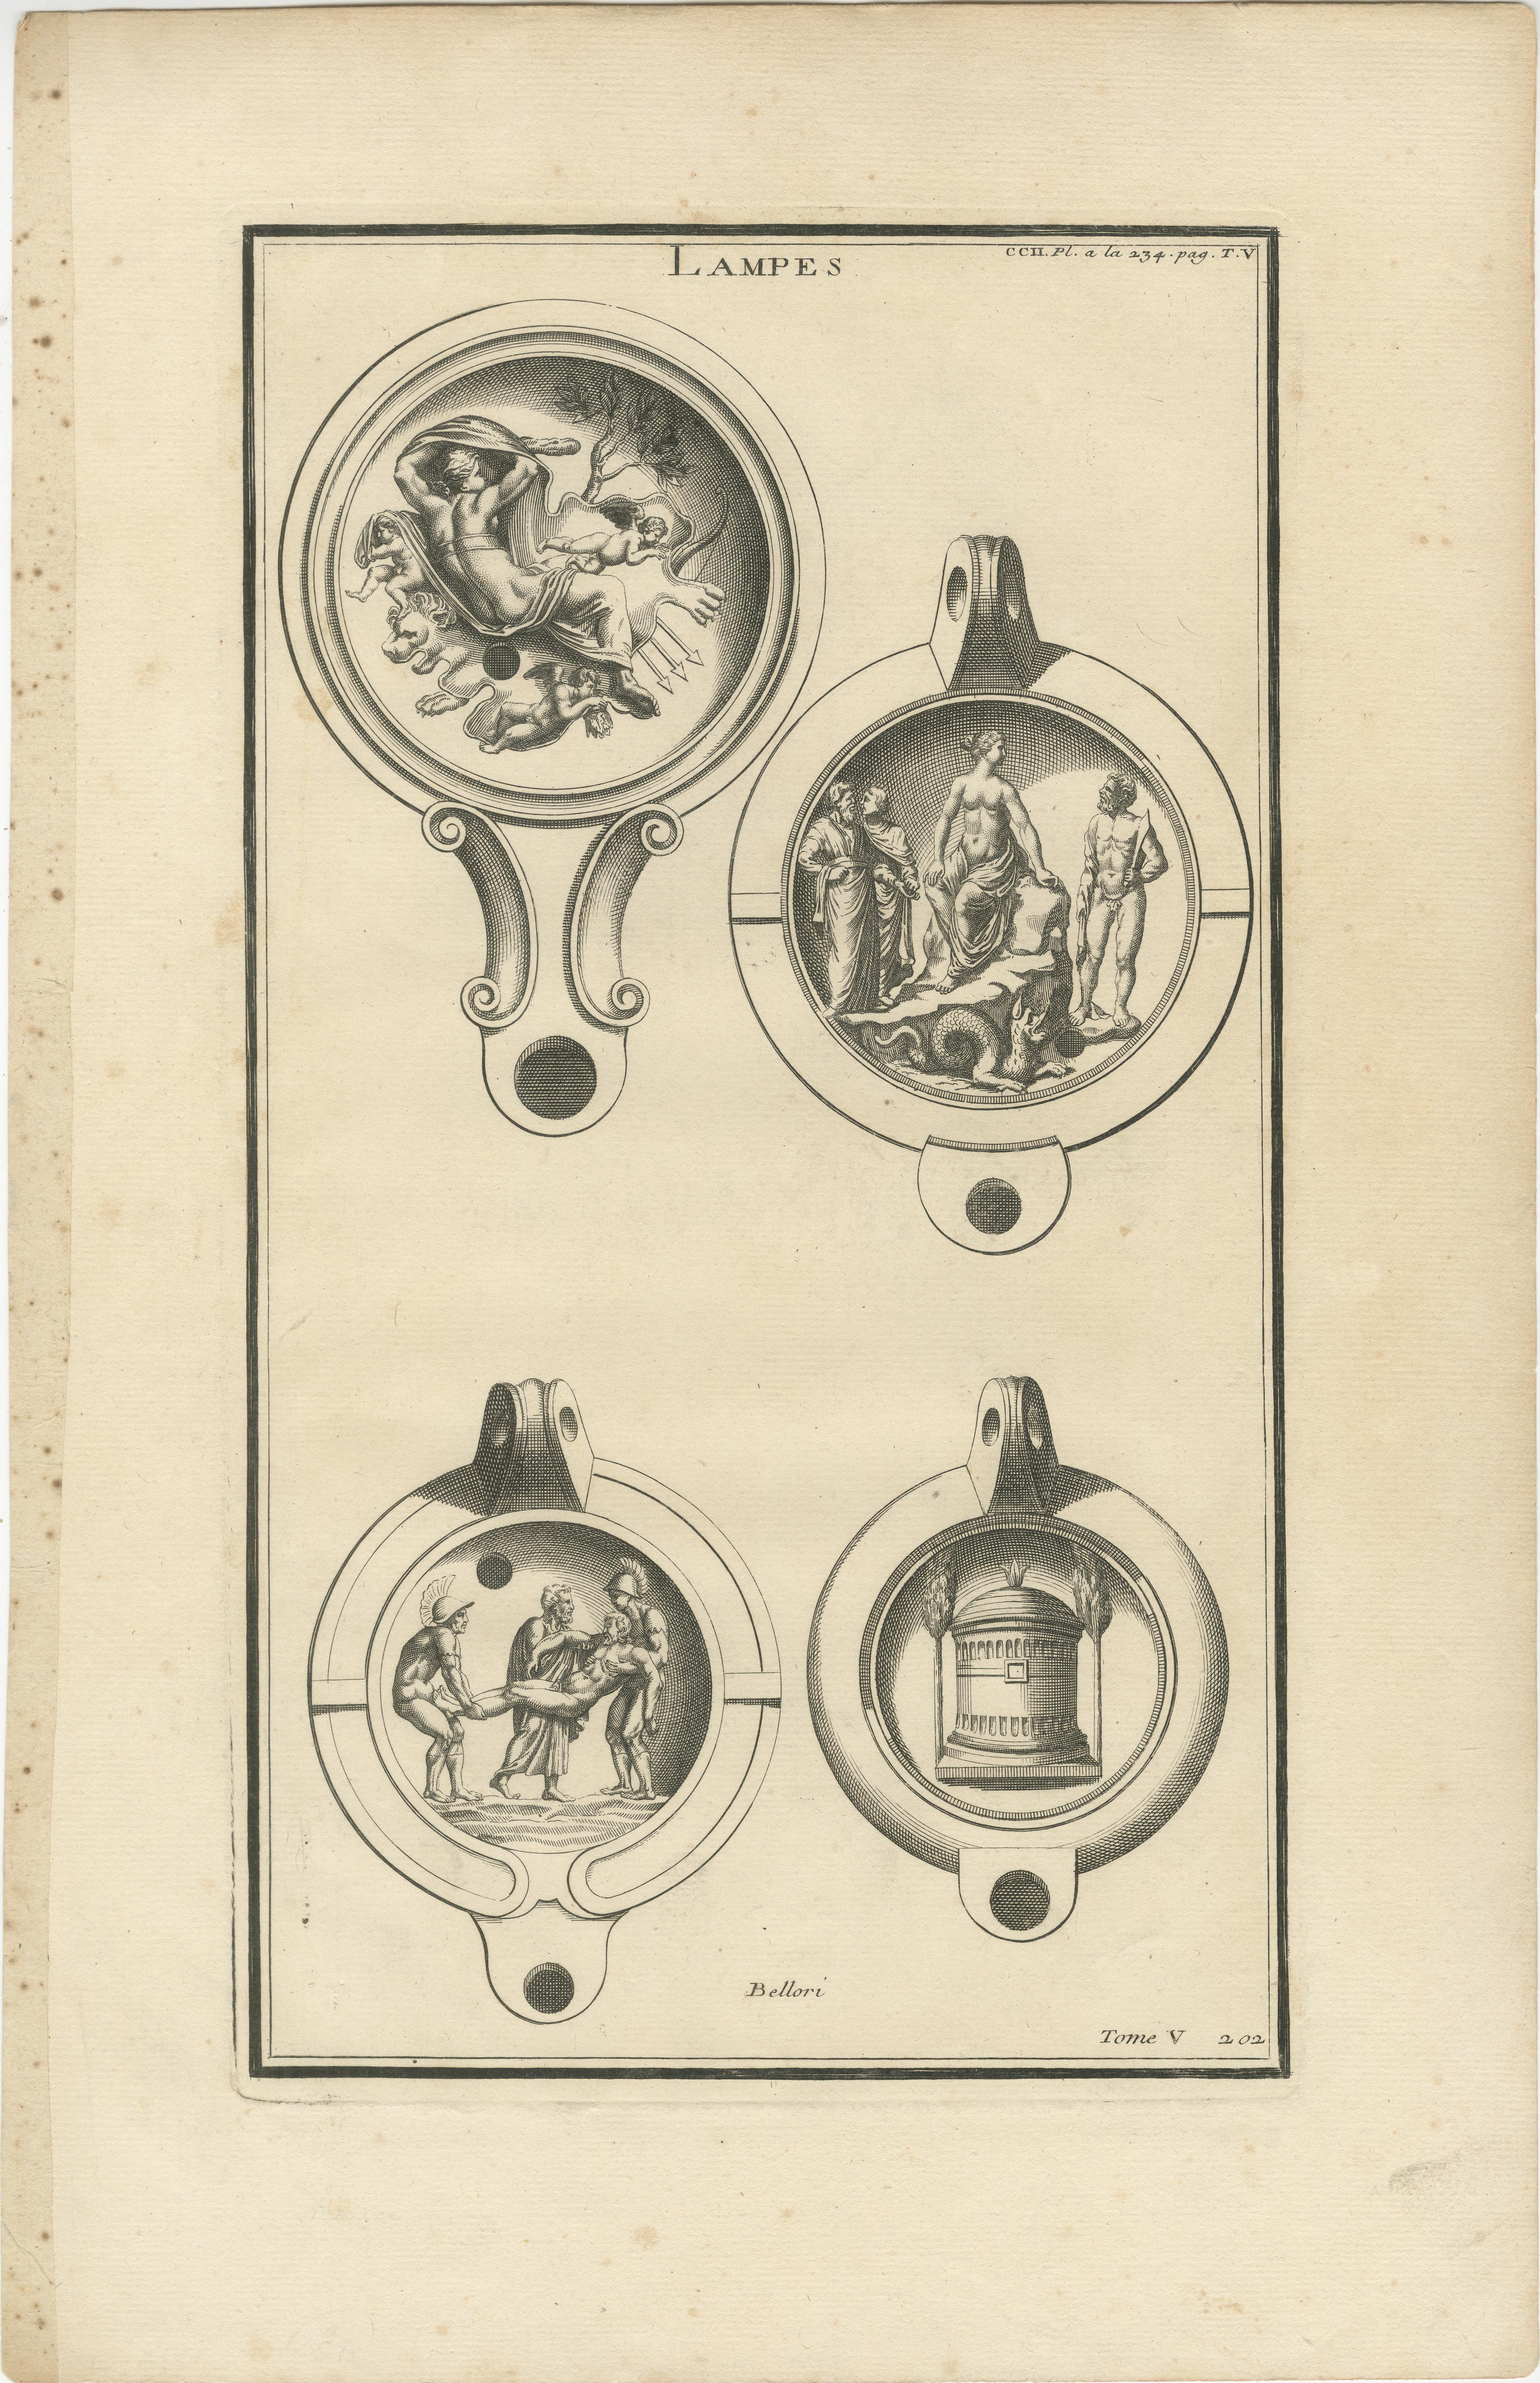 These set of original antique engravings are from Bernard de Montfaucon's 